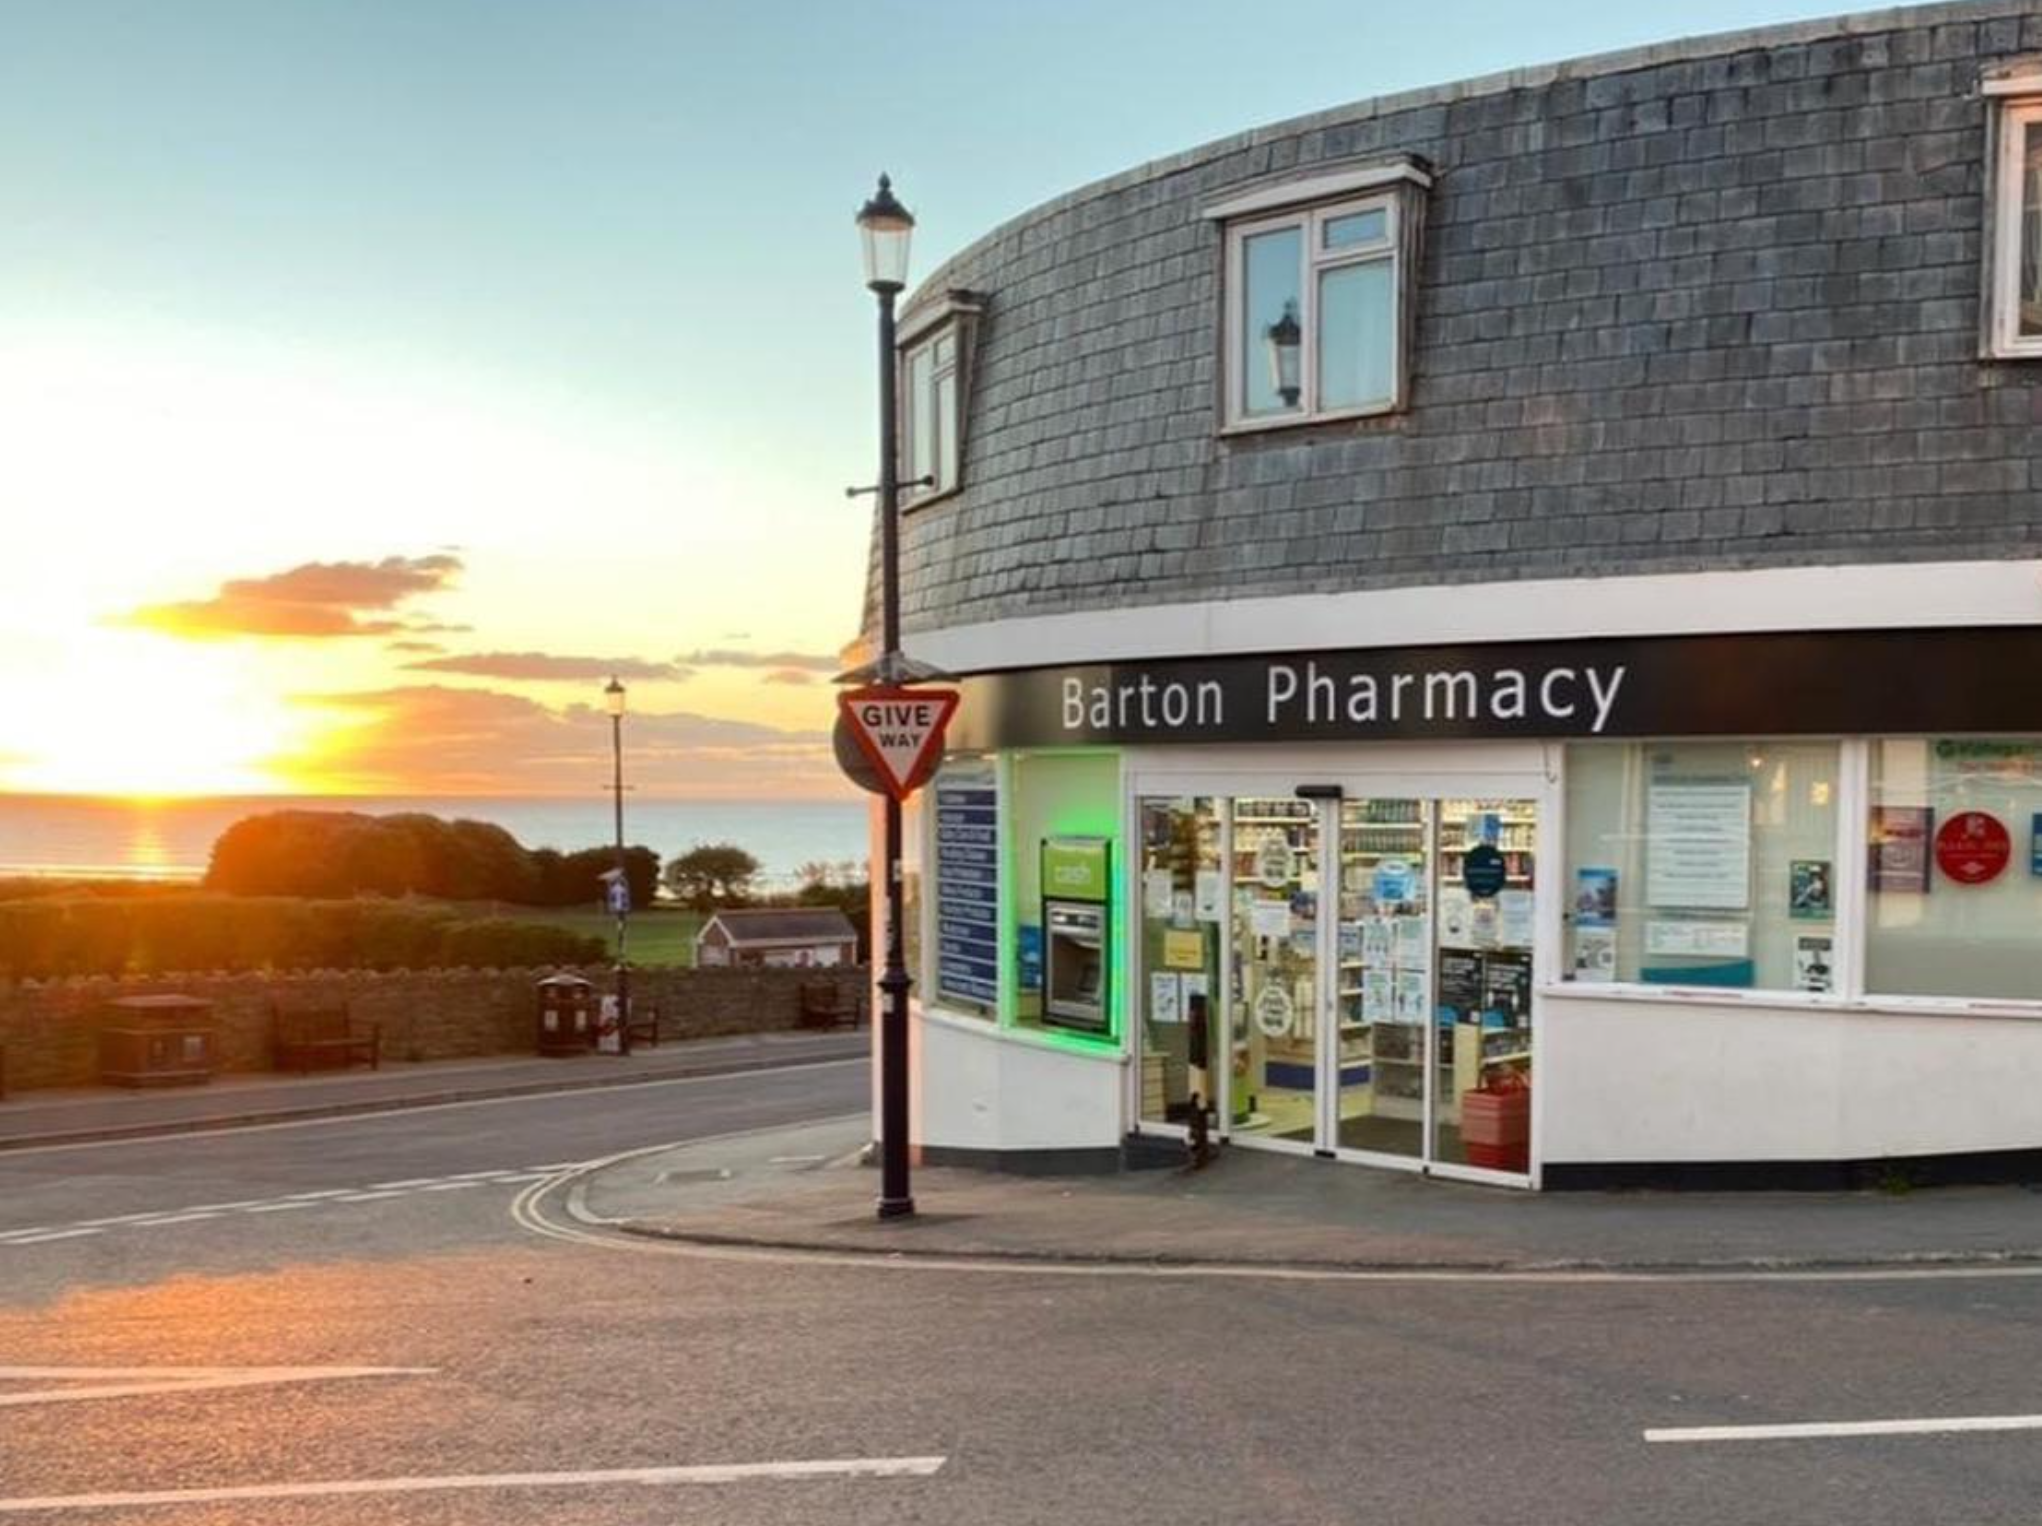 Barton Pharmacy in Woolacombe, Devon